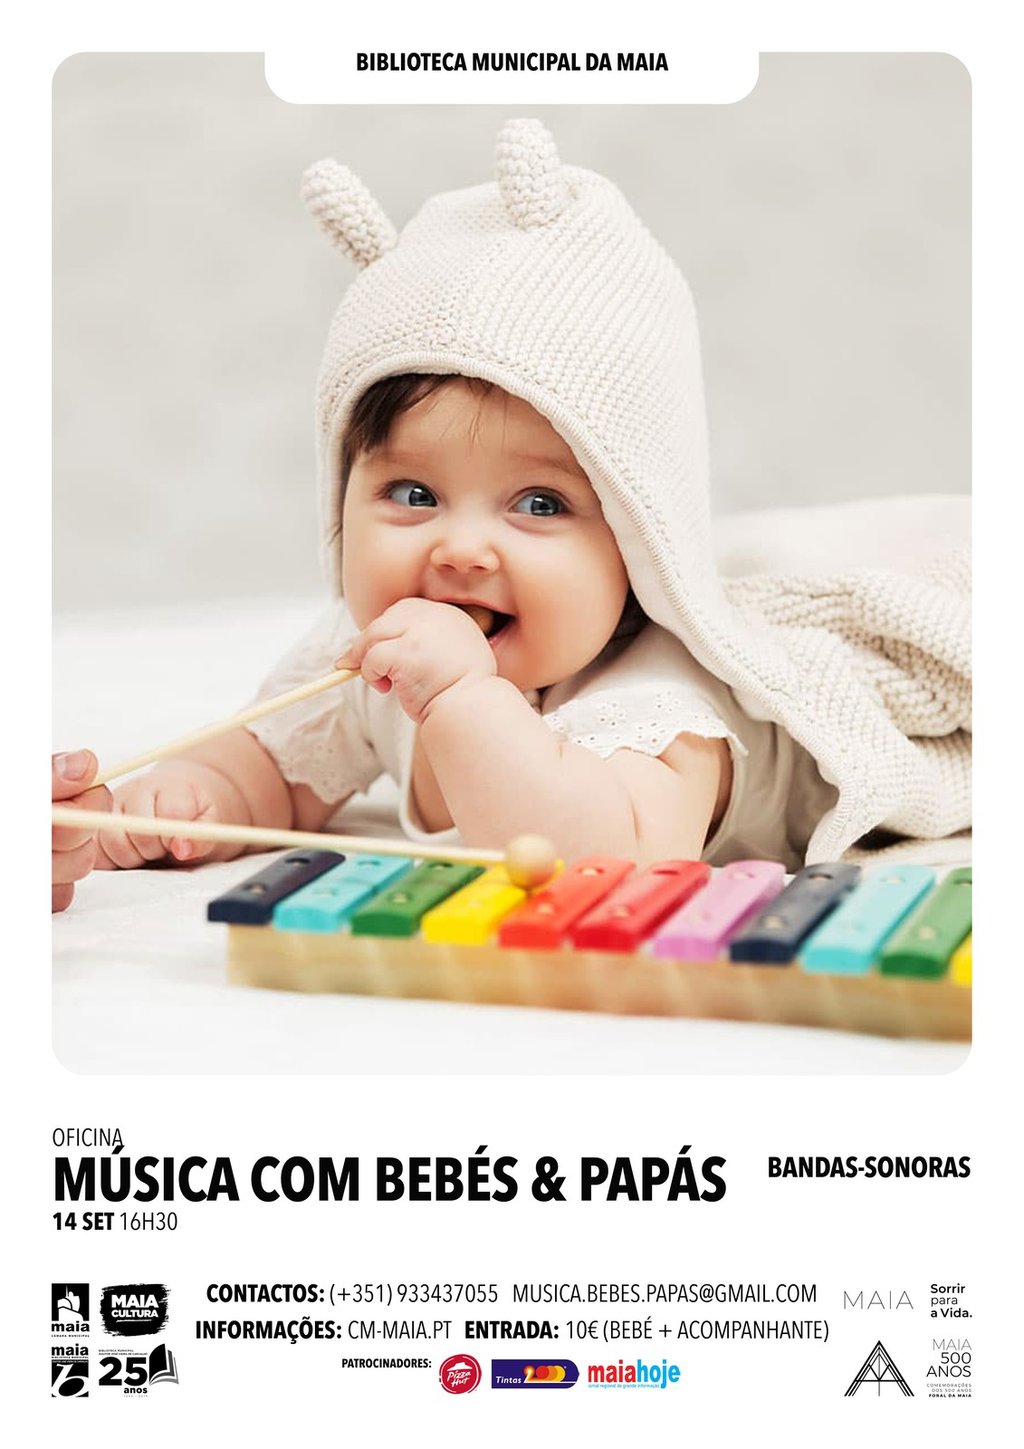 Música com bebés e papás